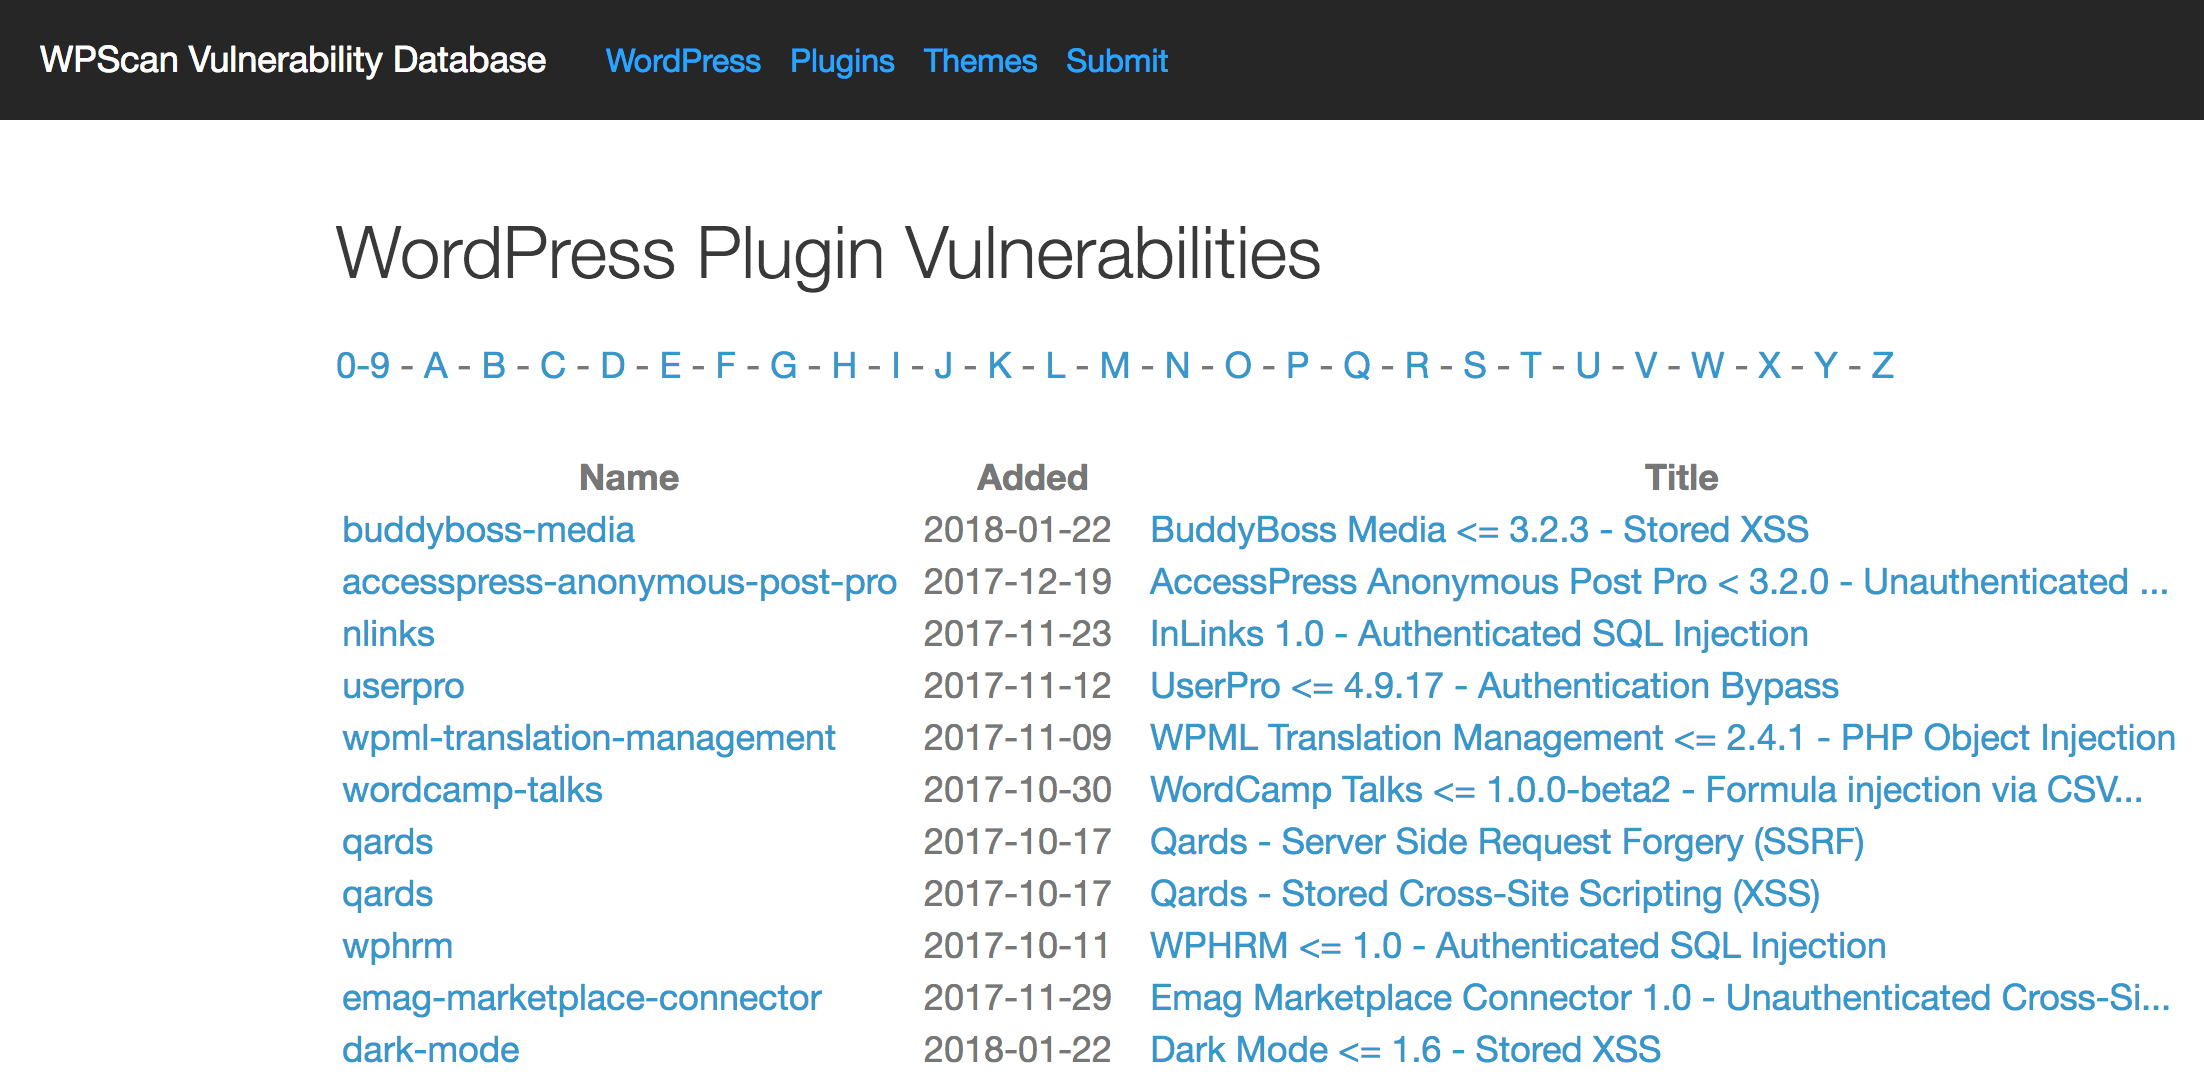 WP Scan's WordPress Vulnerability Database.